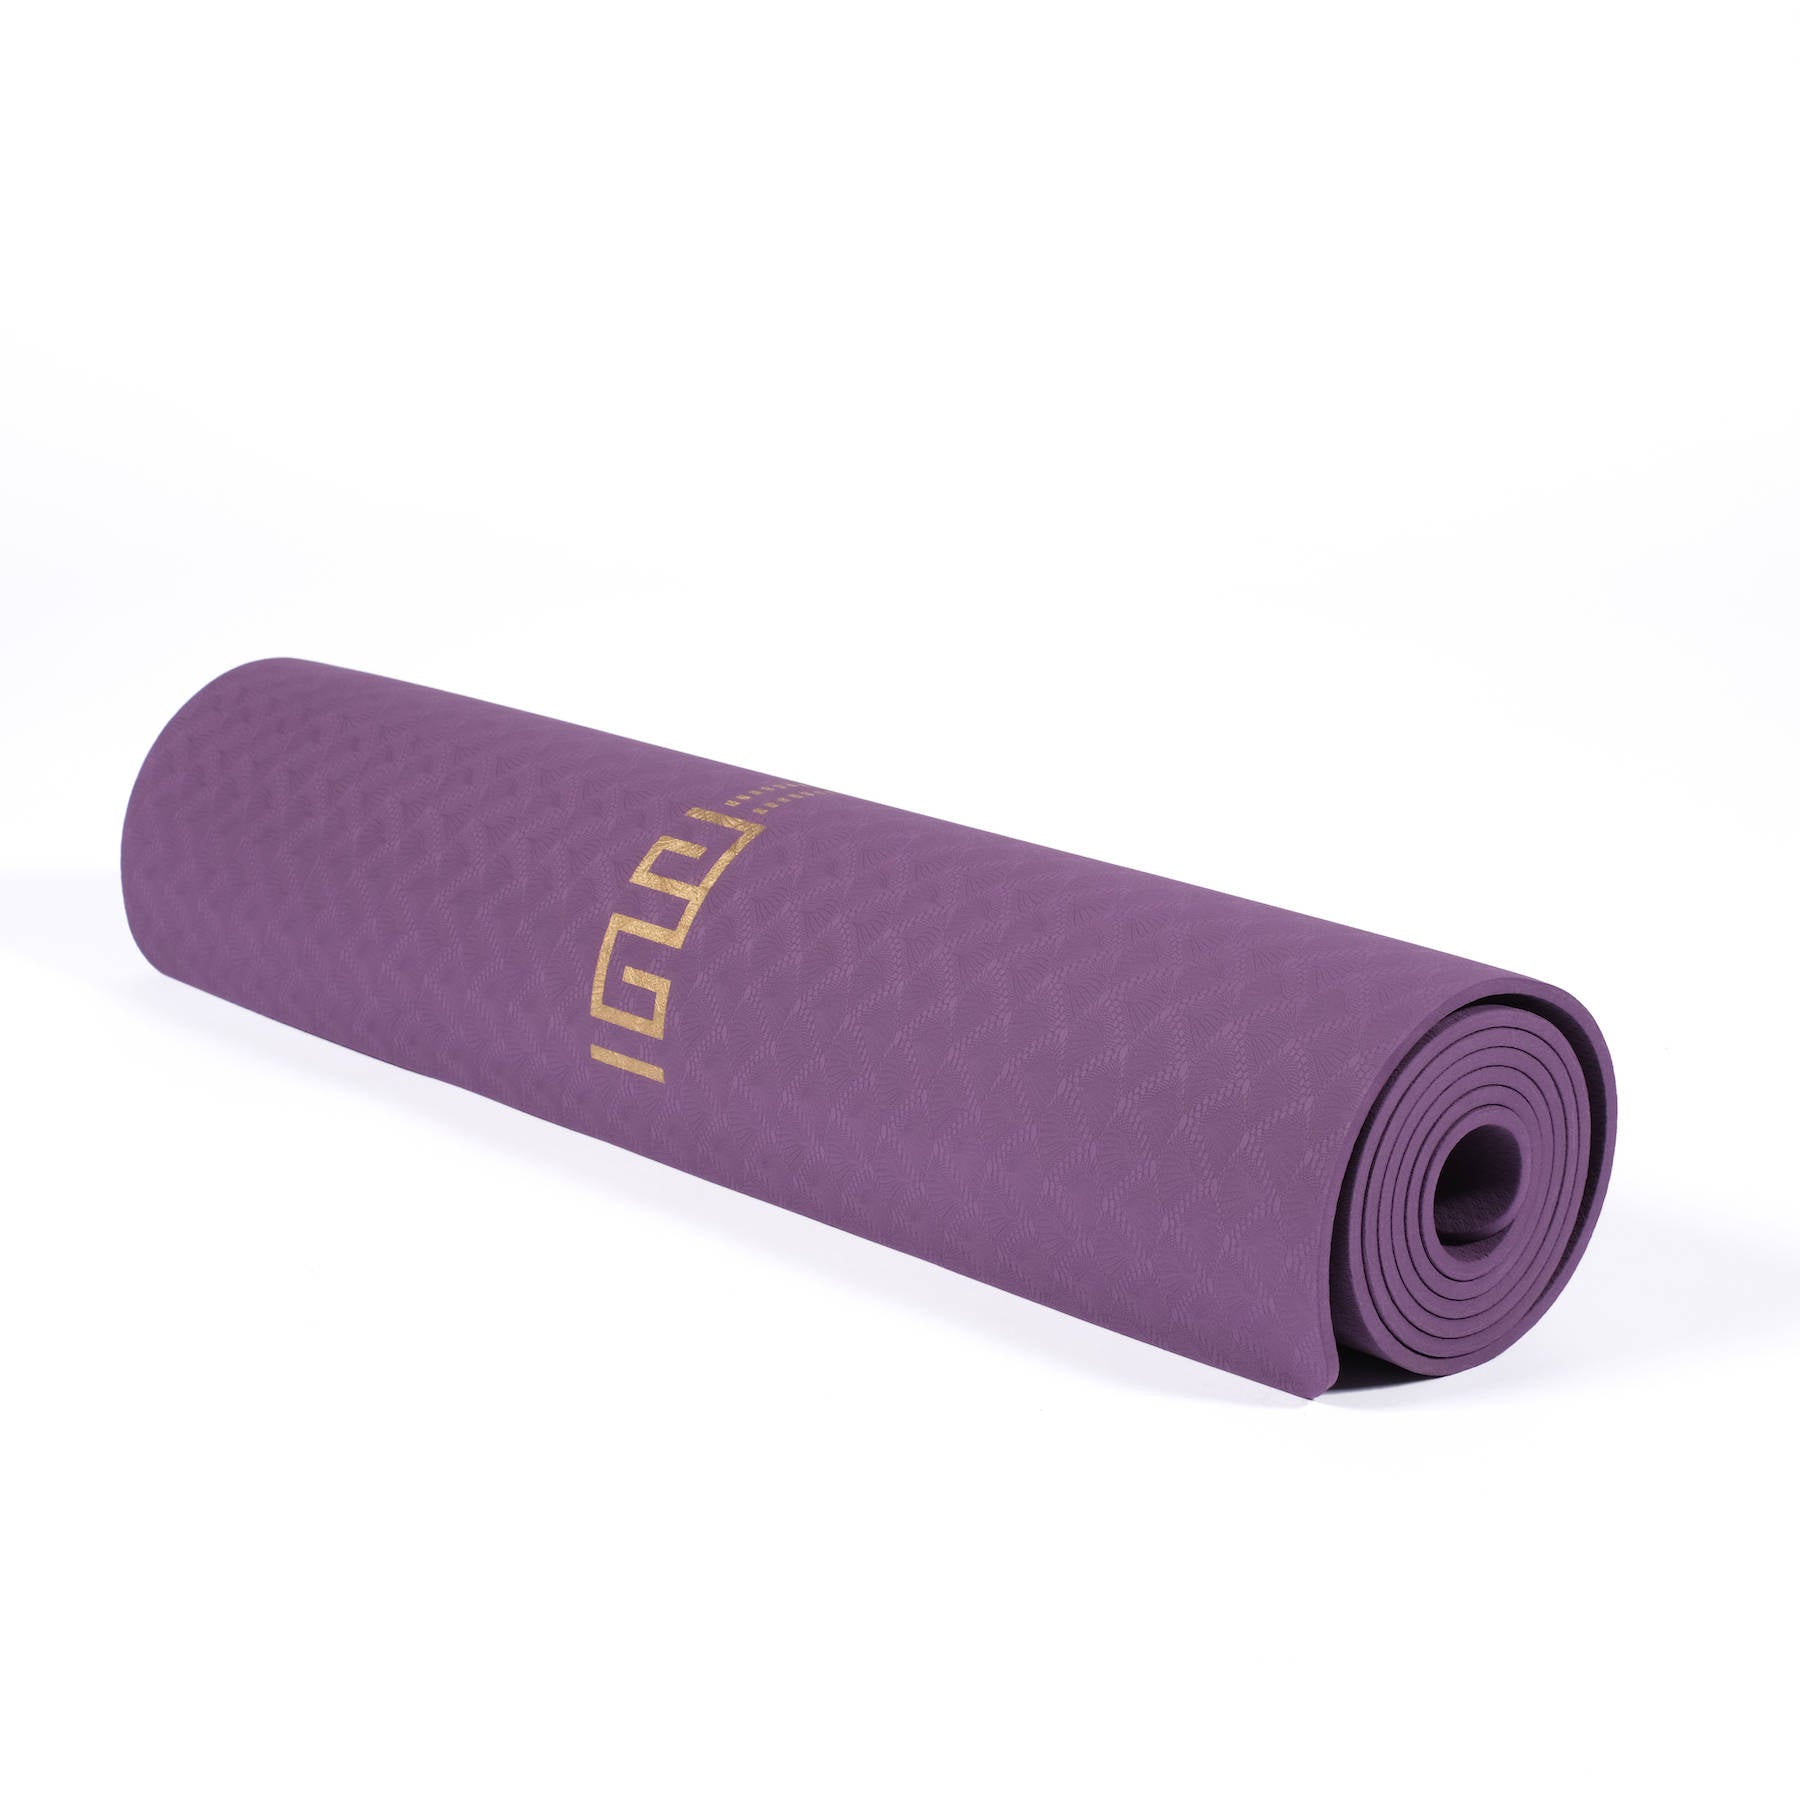 Tapis de yoga TPE gold Print violet